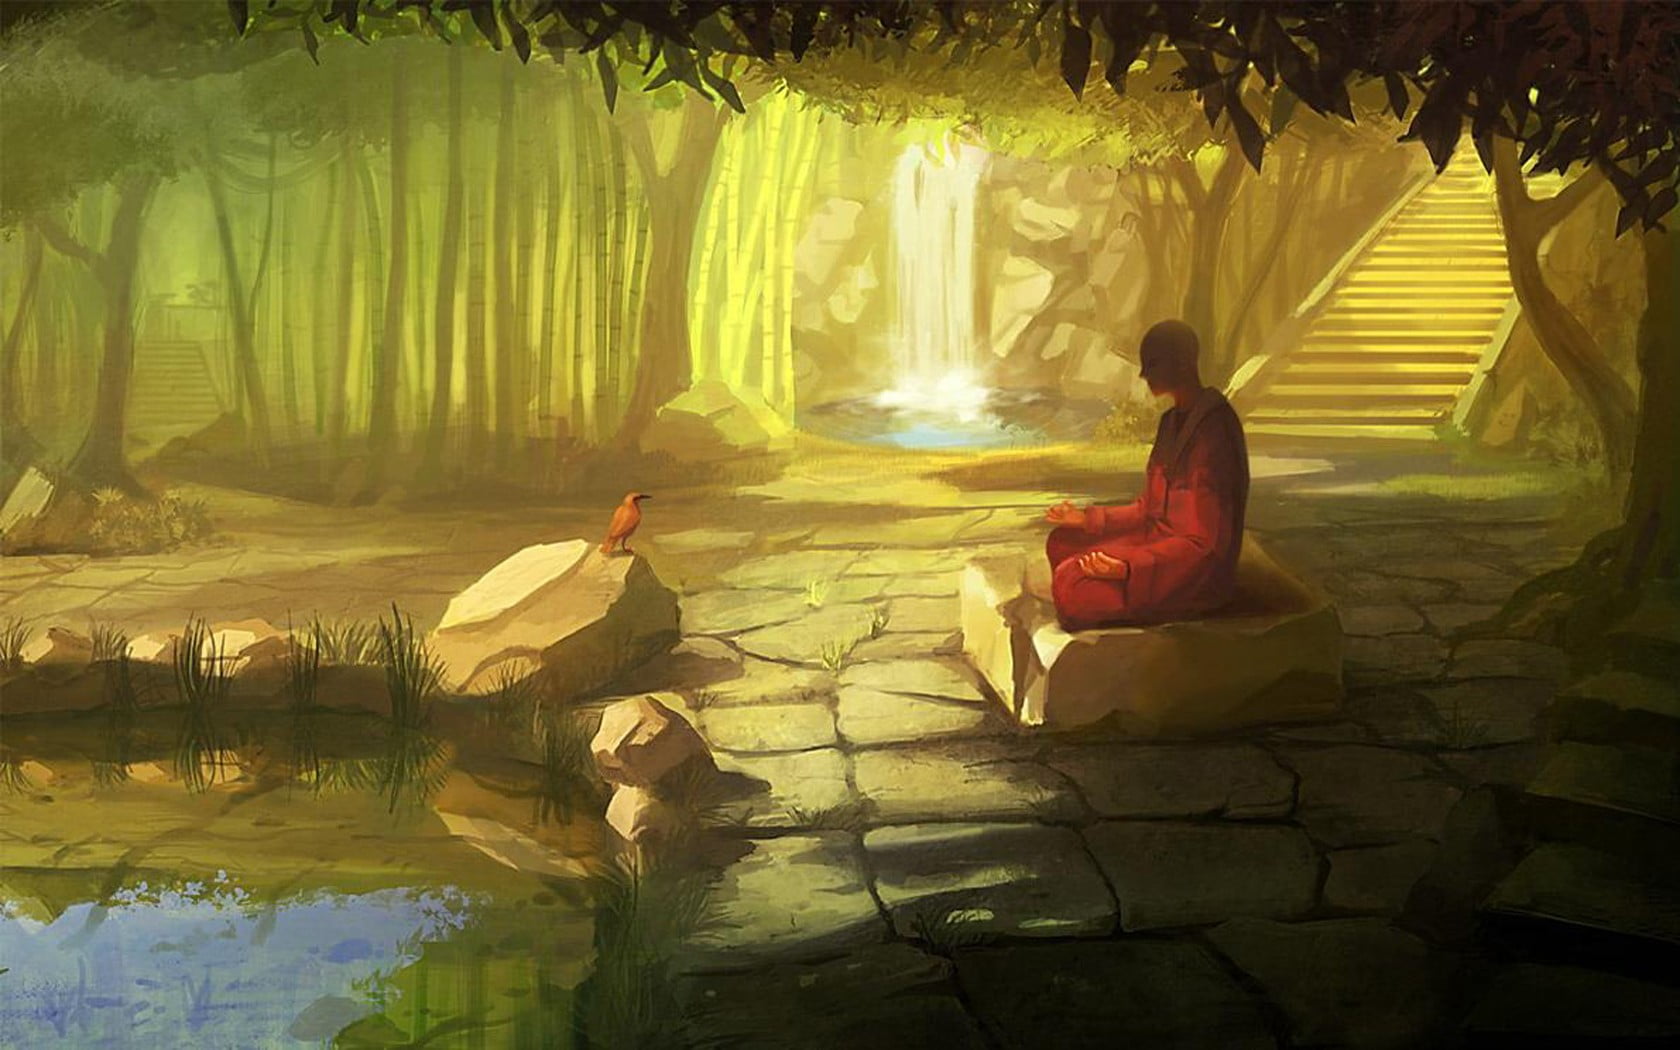 man wearing red robe sitting on rock beside body of water painting, meditation, monks, artwork